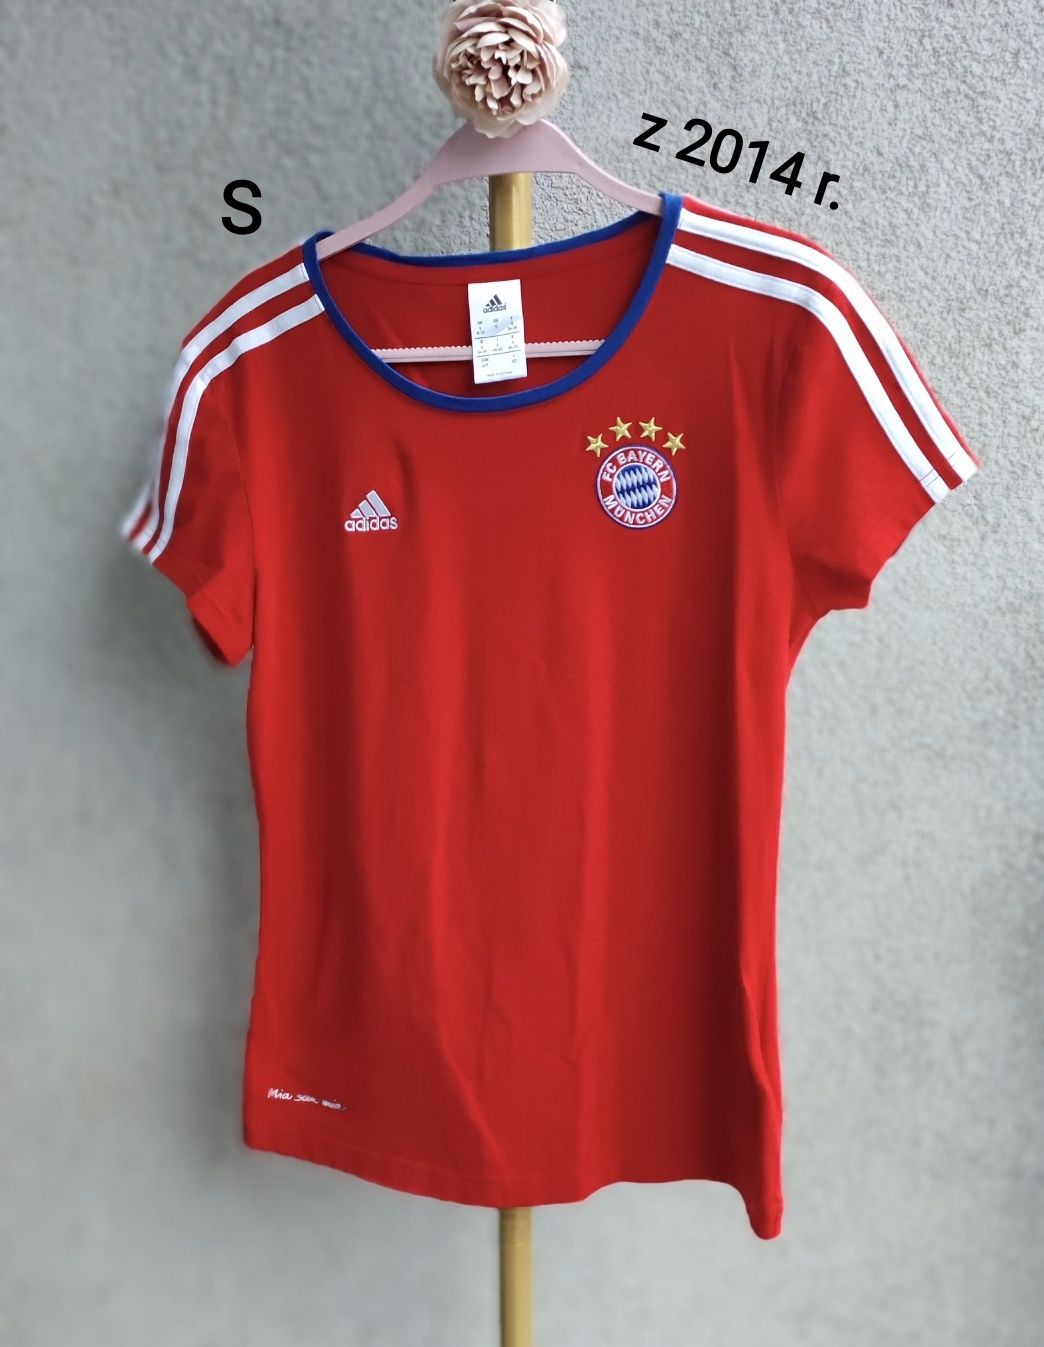 Adidas S 36 FC Bayern München czerwona t-shirt koszulka vintage biust